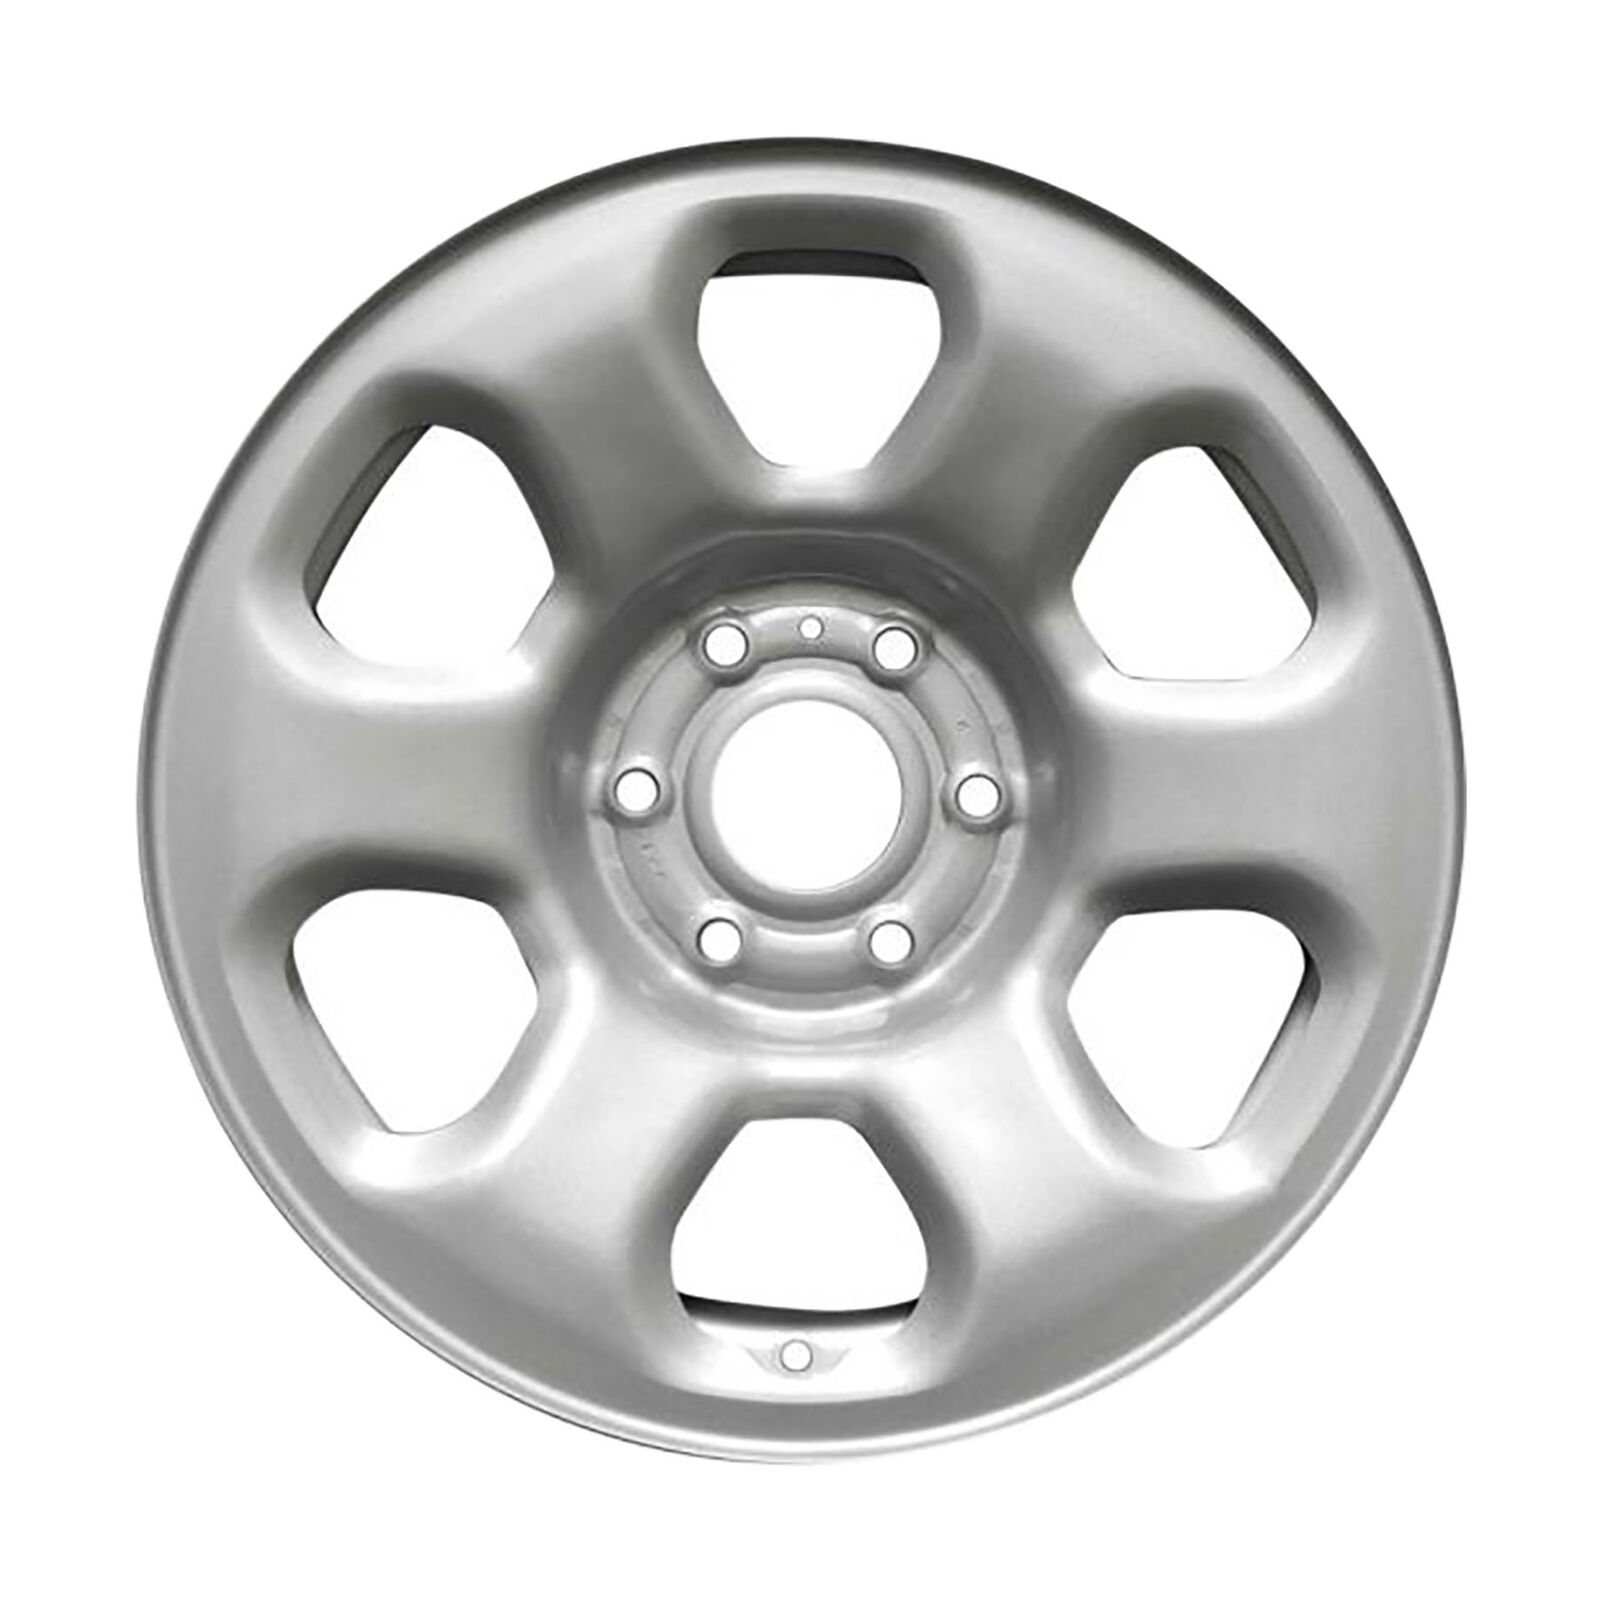 Refurbished 18x8 Painted Silver Wheel fits 2013-2015 Nissan Titan Pickup